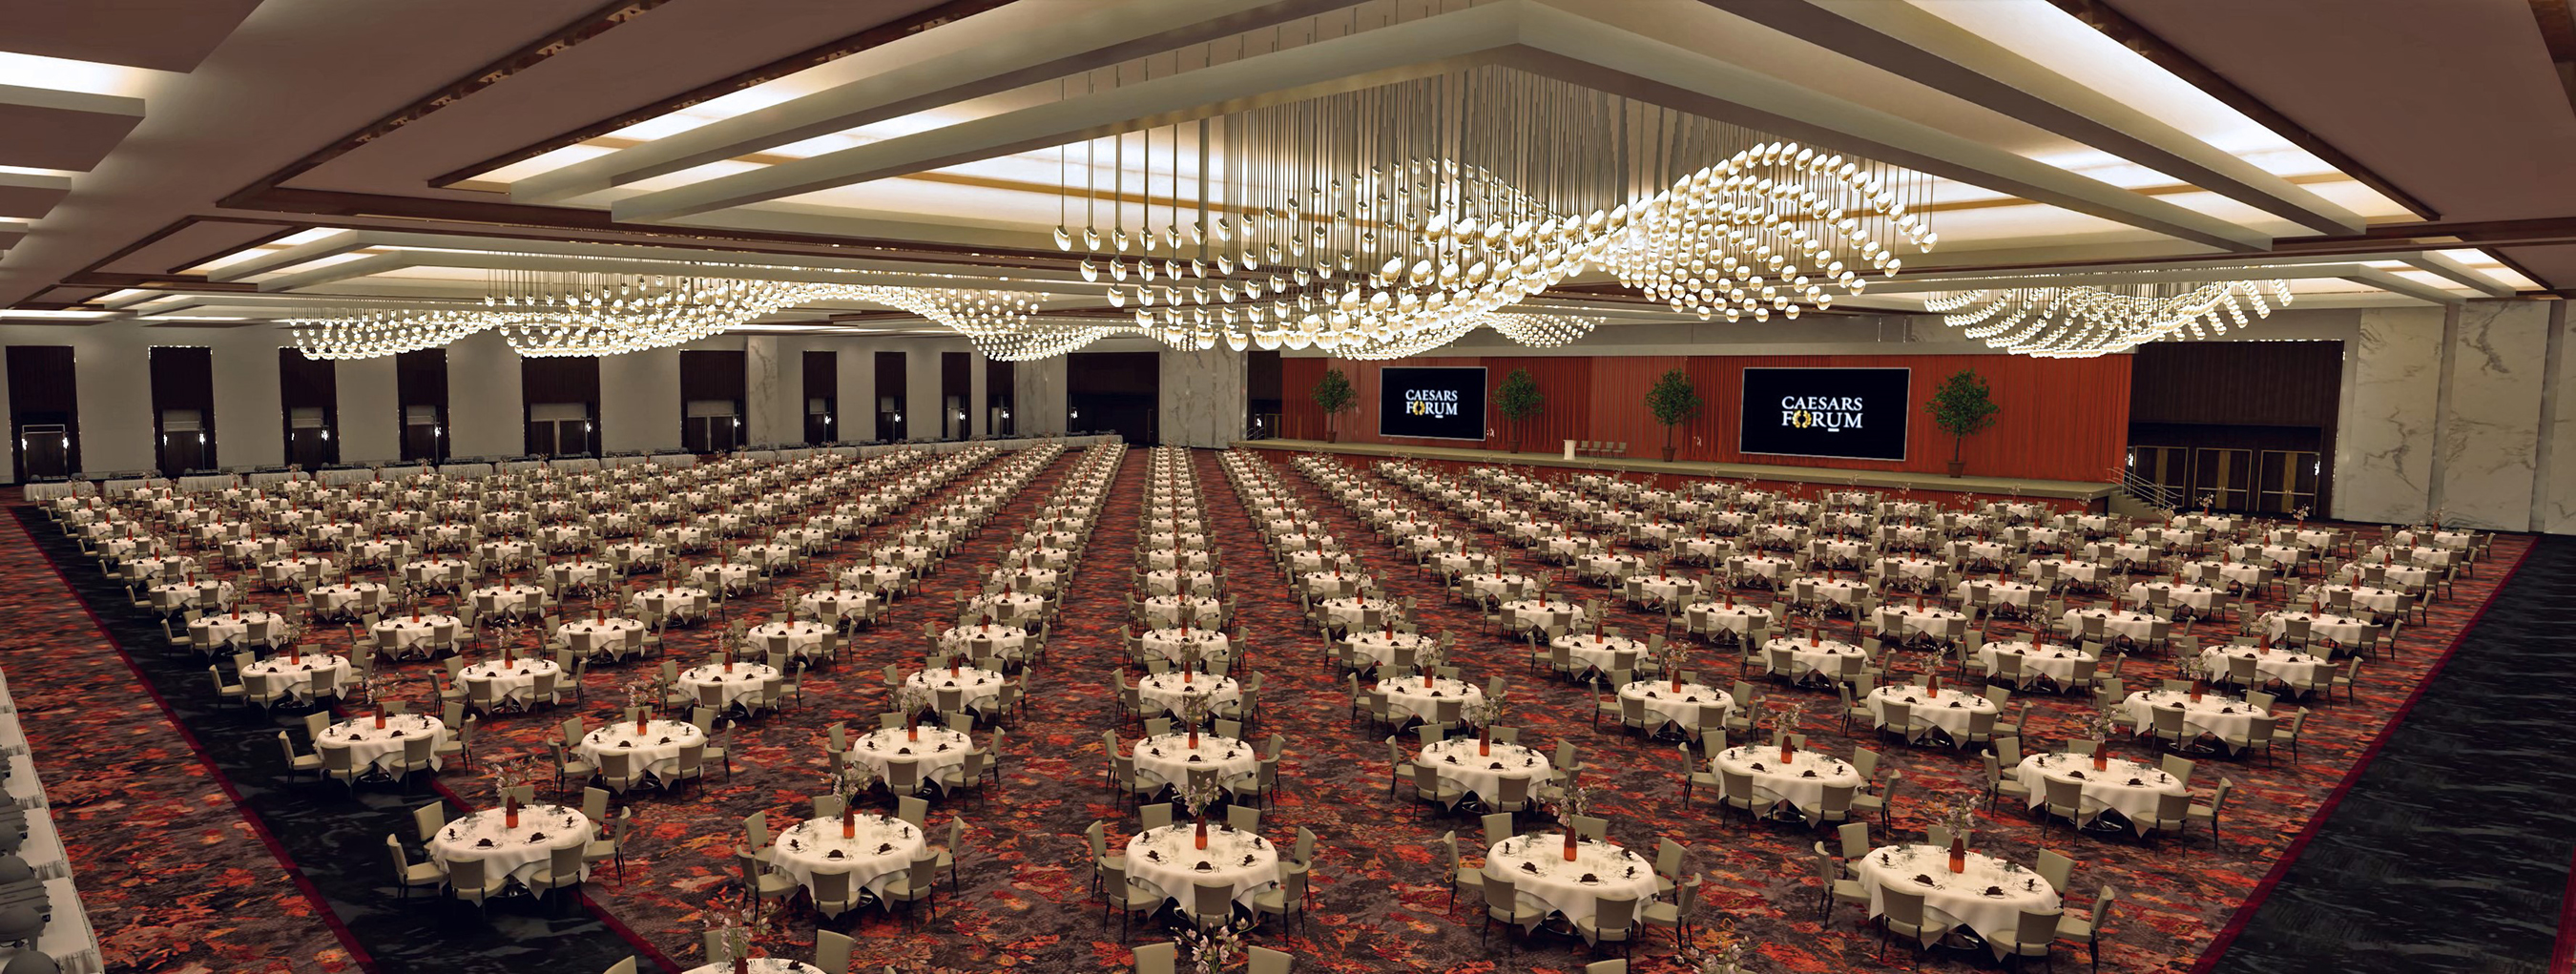 Interior rendering of the world’s largest pillarless ballroom inside CAESARS FORUM, Caesars Entertainment’s $375 million conference center opening in Las Vegas in 2020.